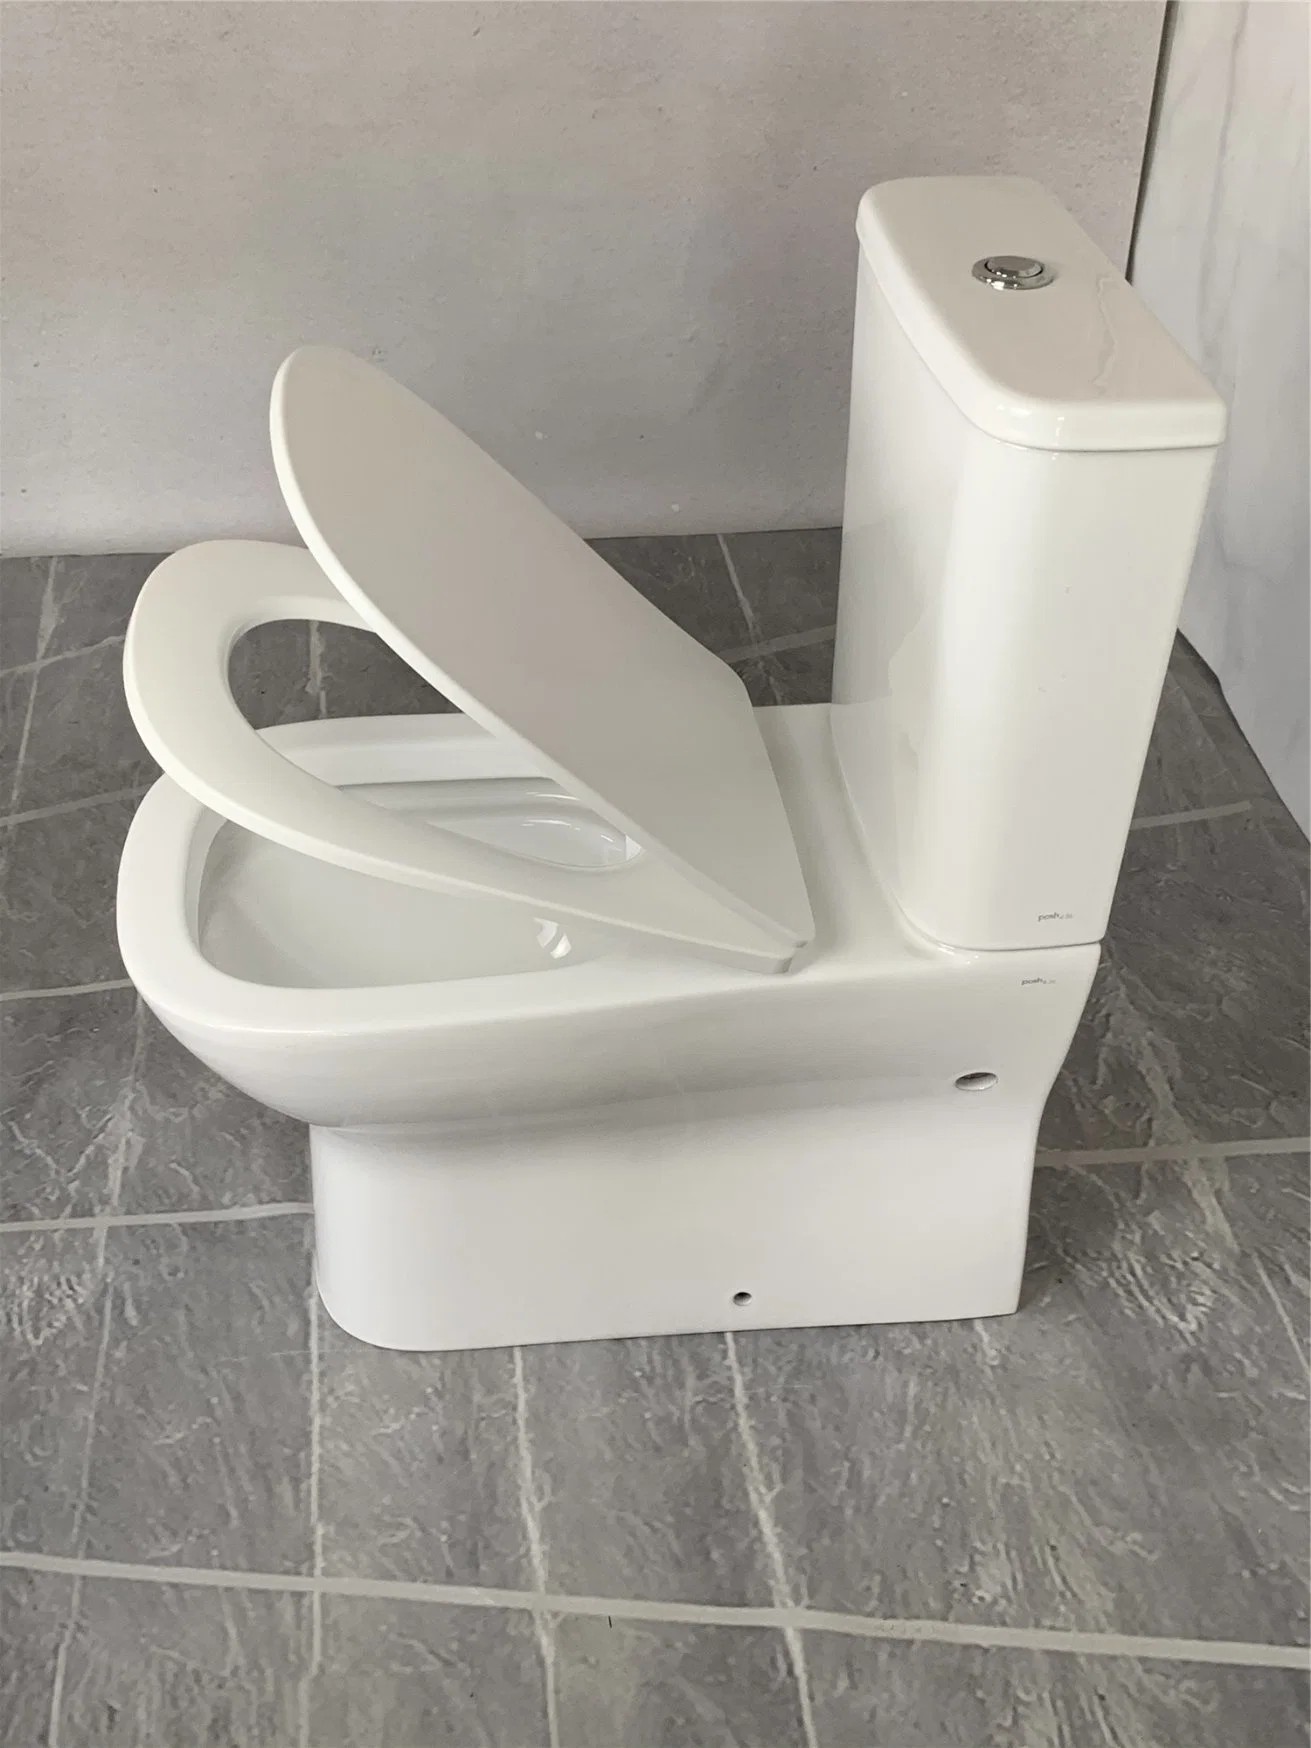 Neues Design Quadratische Form Wc Toiletten Sanitärkeramik Chaozhou Keramik Ptrap Randlos Zwei Stück Set Badezimmer